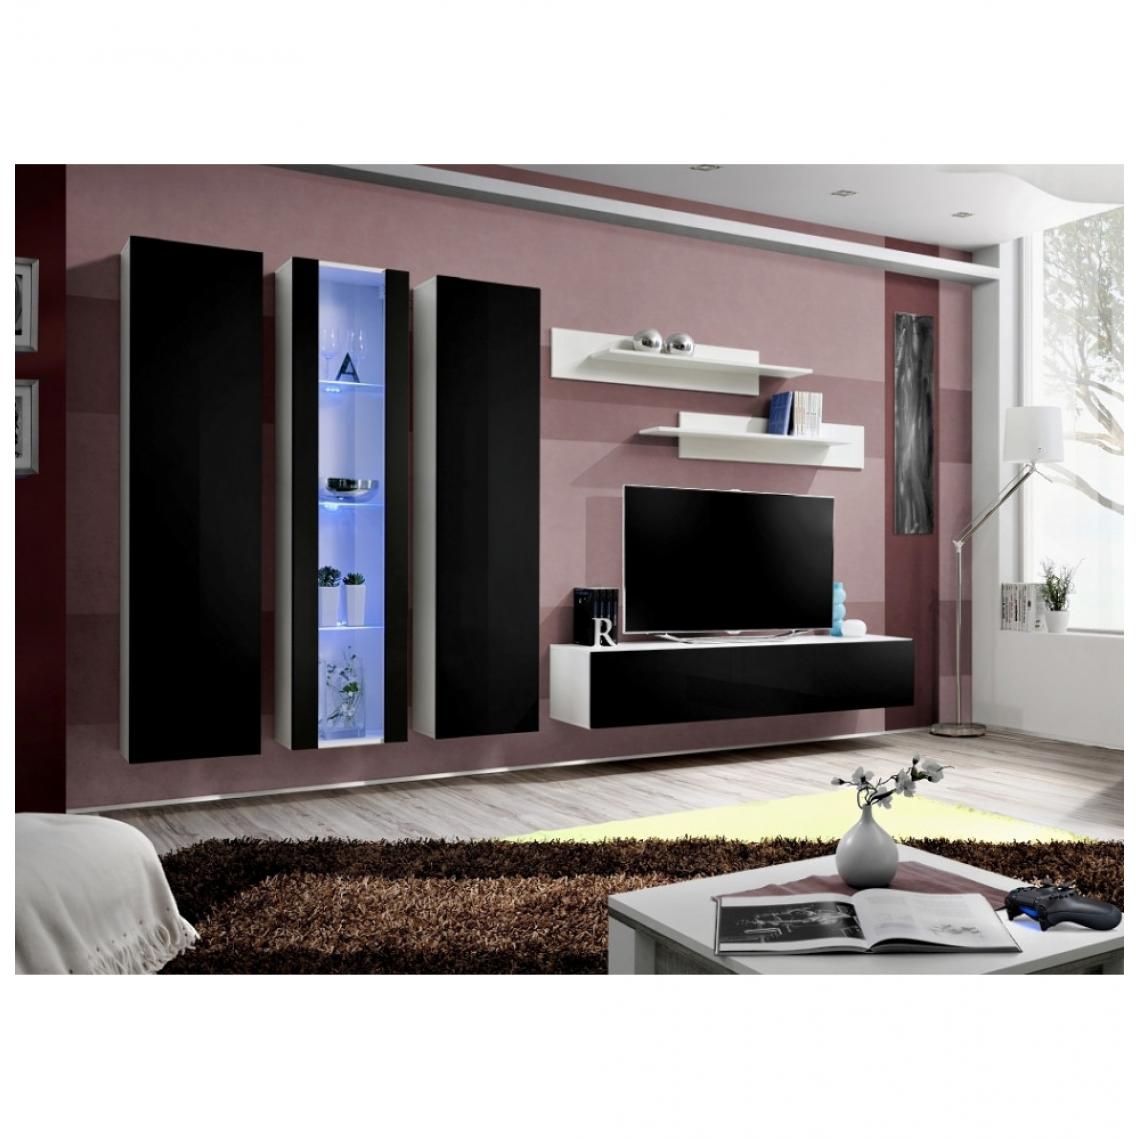 Ac-Deco - Ensemble meuble TV mural - Fly V- 310 cm x 190 cm x 40 cm - Blanc et noir - Meubles TV, Hi-Fi